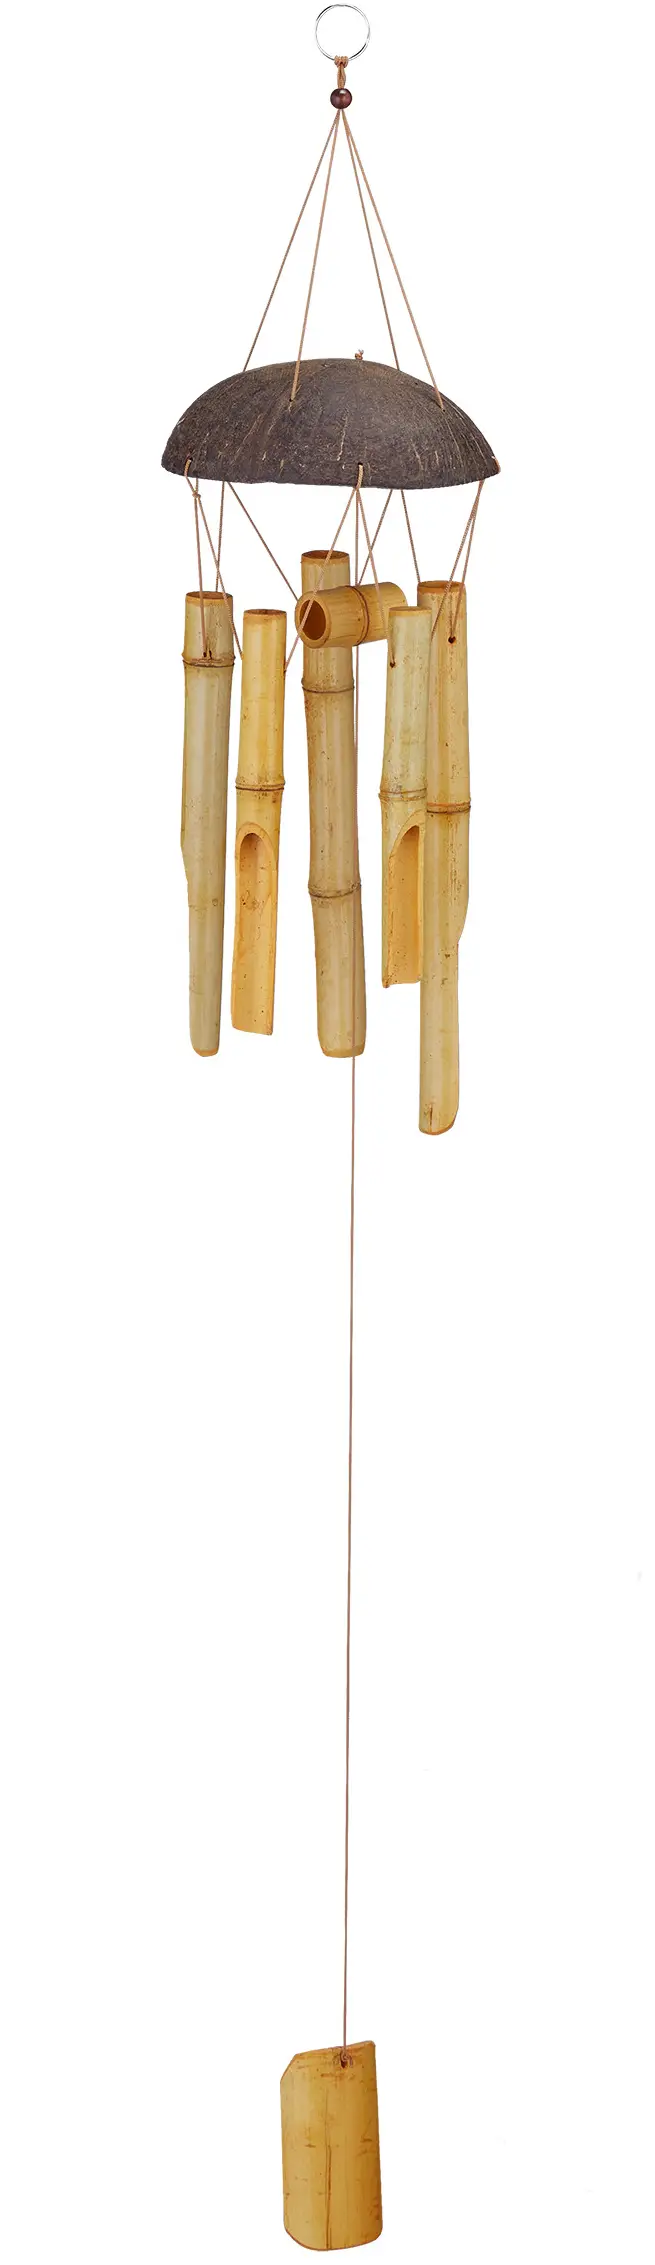 Windspiel aus Bambus Kokos 